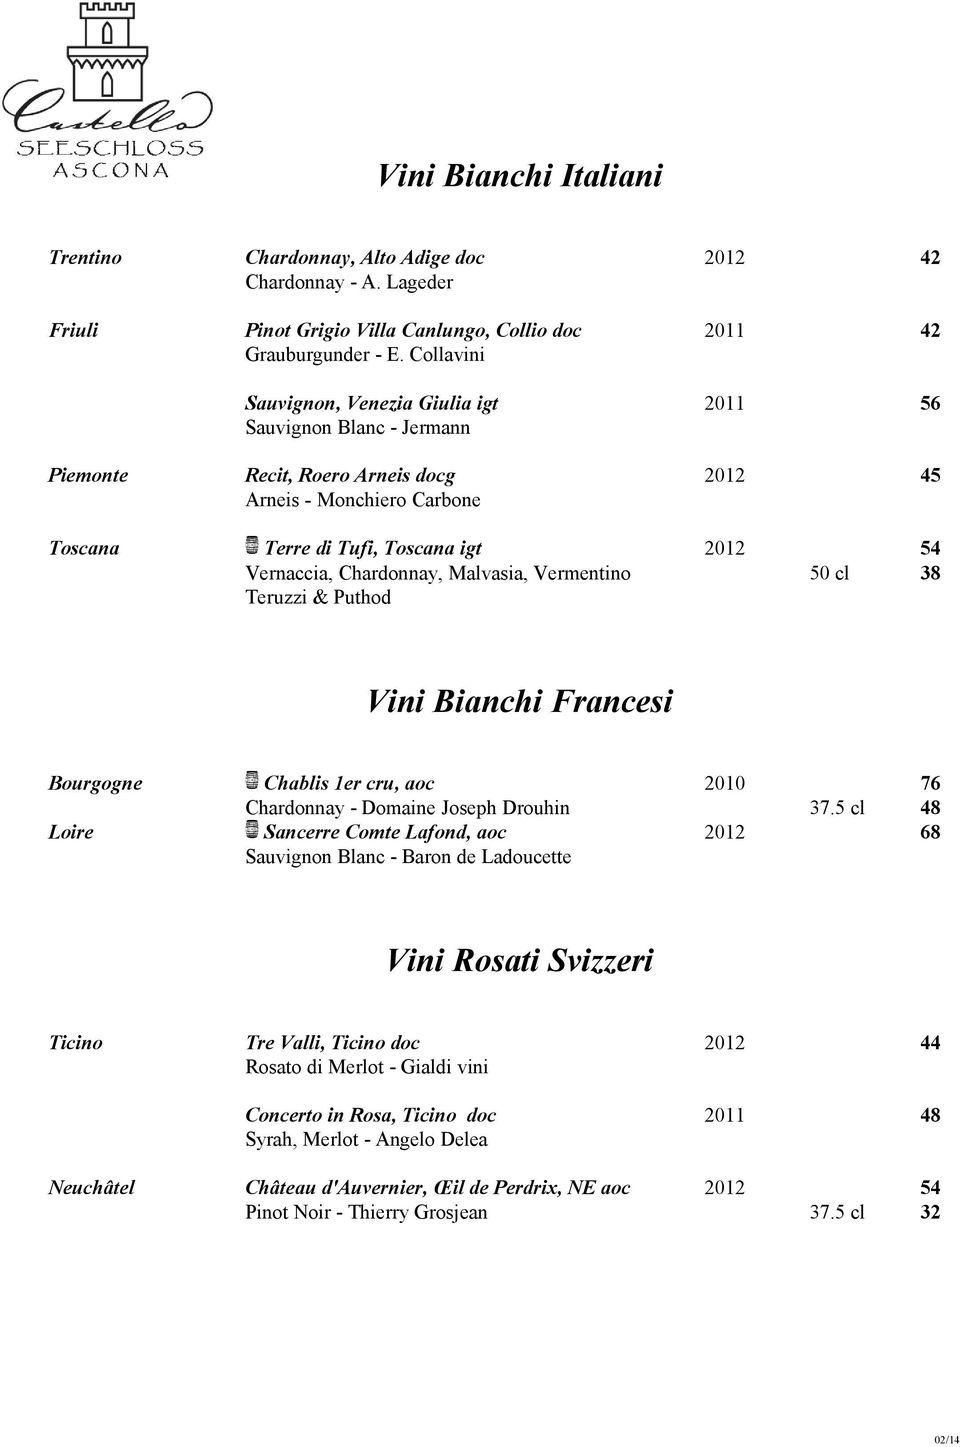 Chardonnay, Malvasia, Vermentino 50 cl 38 Teruzzi & Puthod Vini Bianchi Francesi Bourgogne Chablis 1er cru, aoc 2010 76 Chardonnay - Domaine Joseph Drouhin 37.